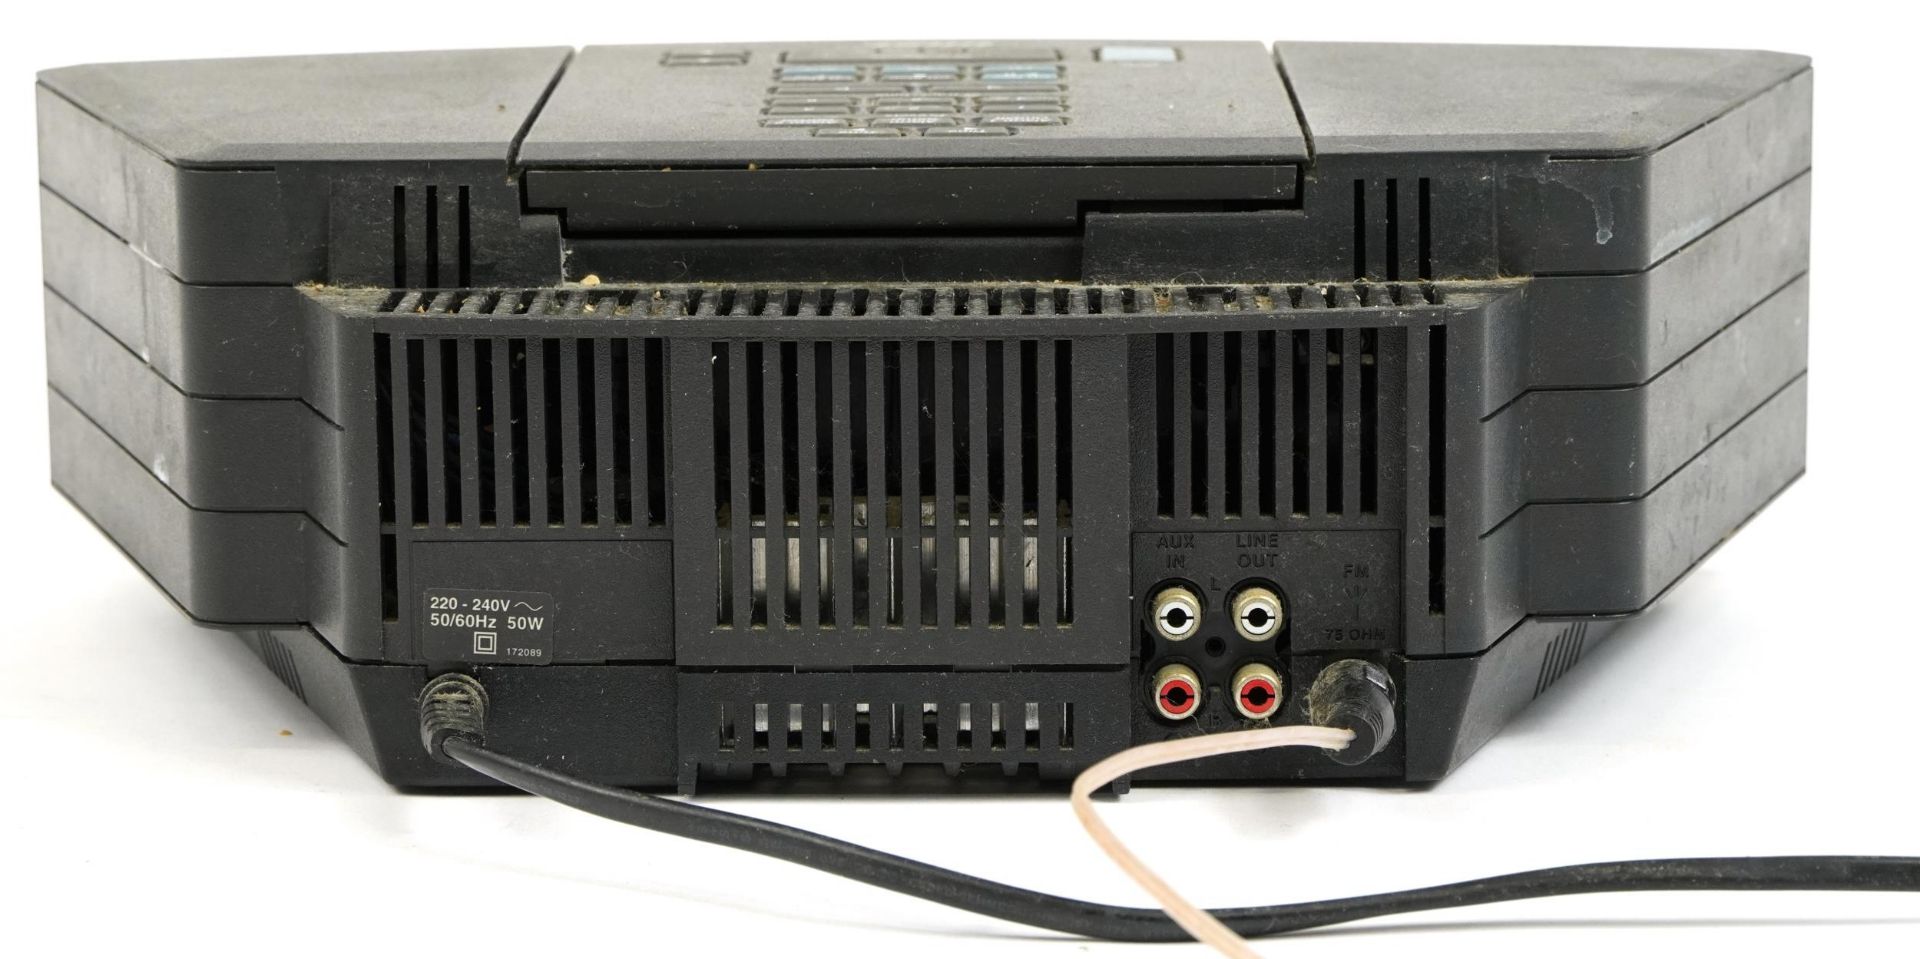 Bose Wave radio/CD player model AWRC3G - Image 2 of 3